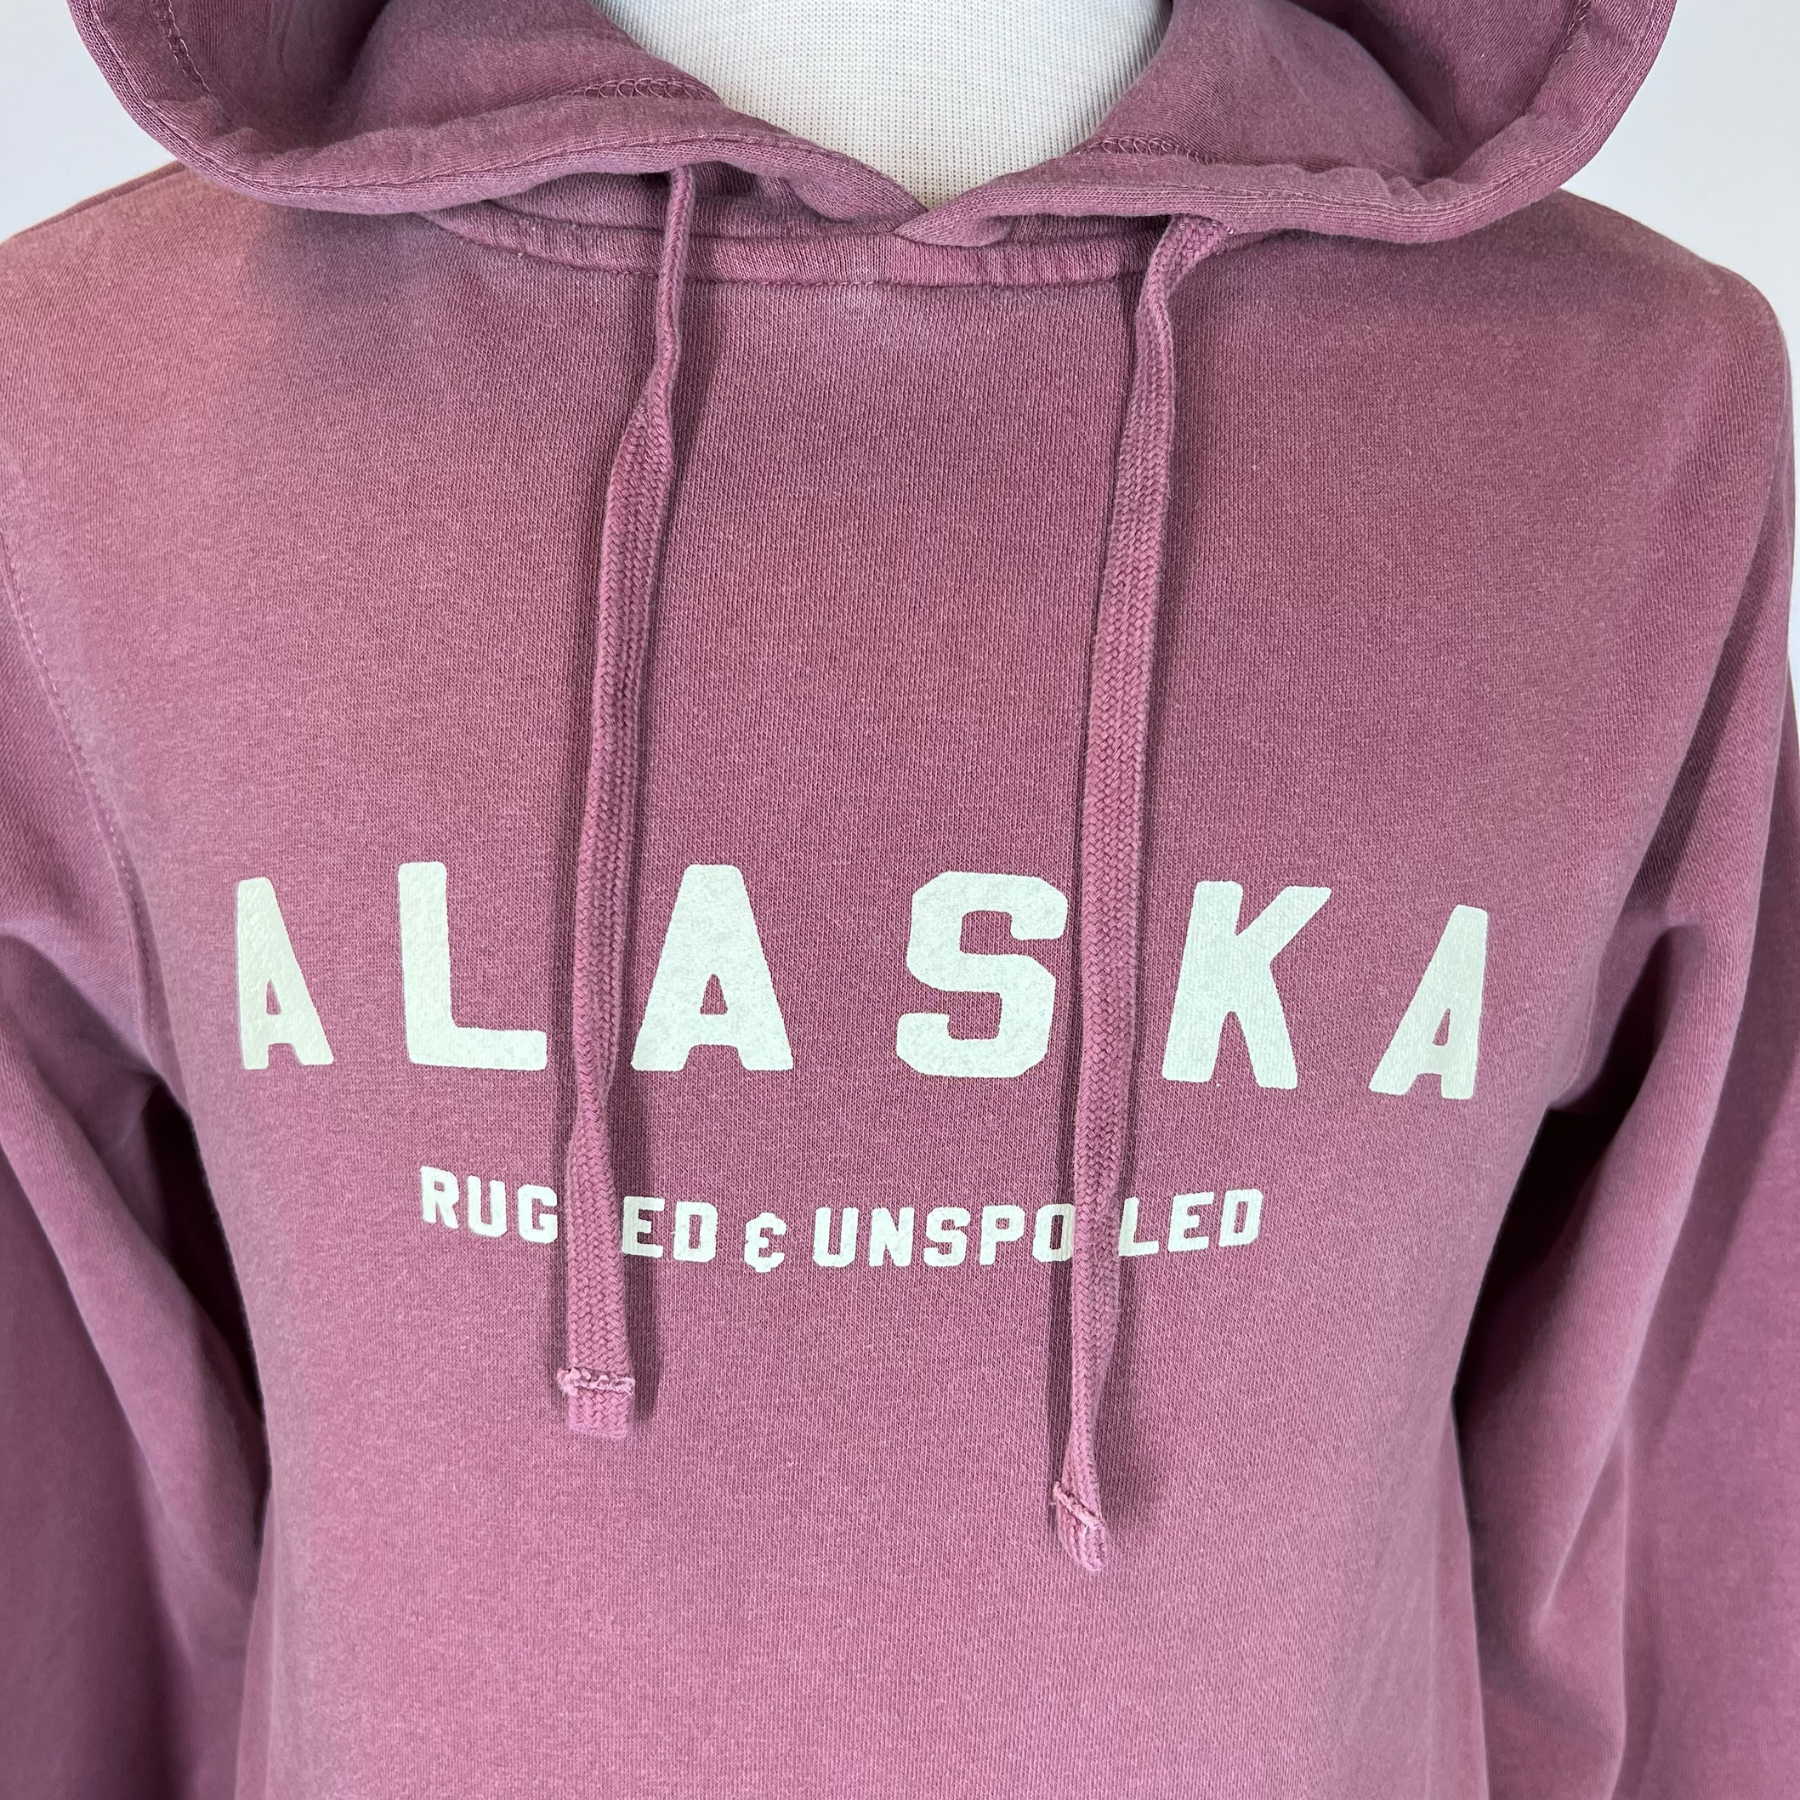 Alaska Oversized Hoodie